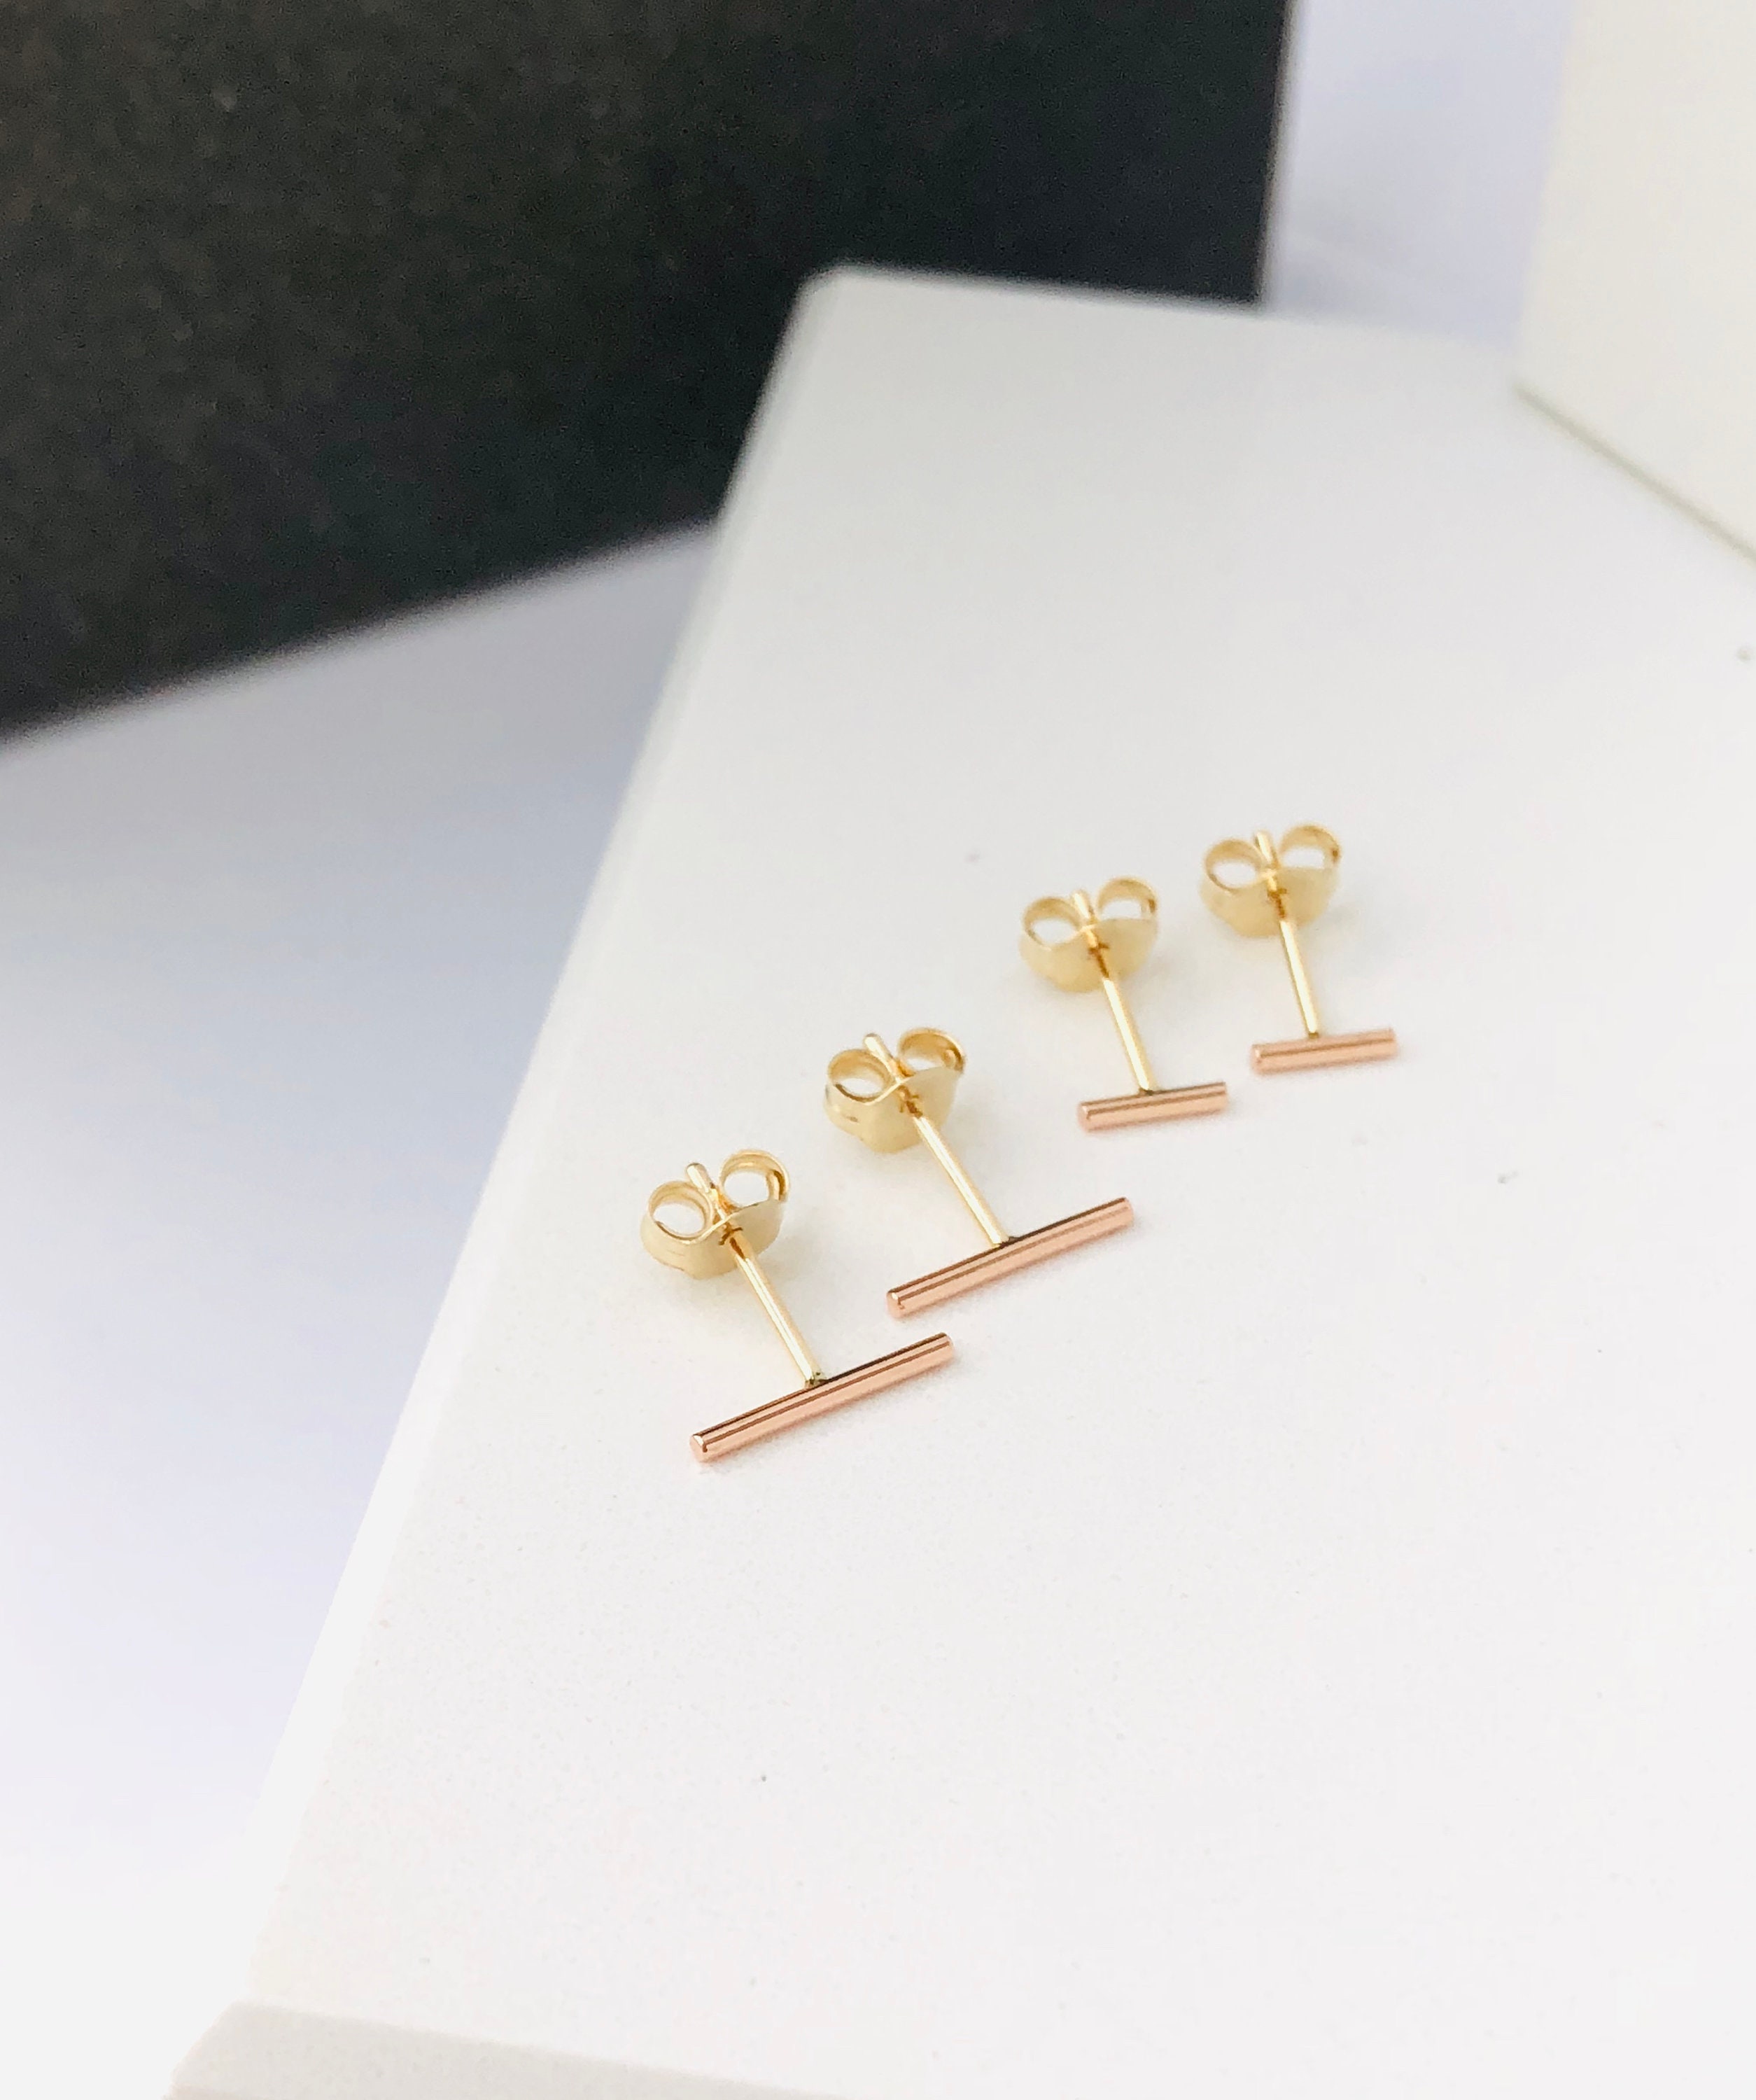 Gold line earrings solid gold stud earrings cartilage bar | Etsy